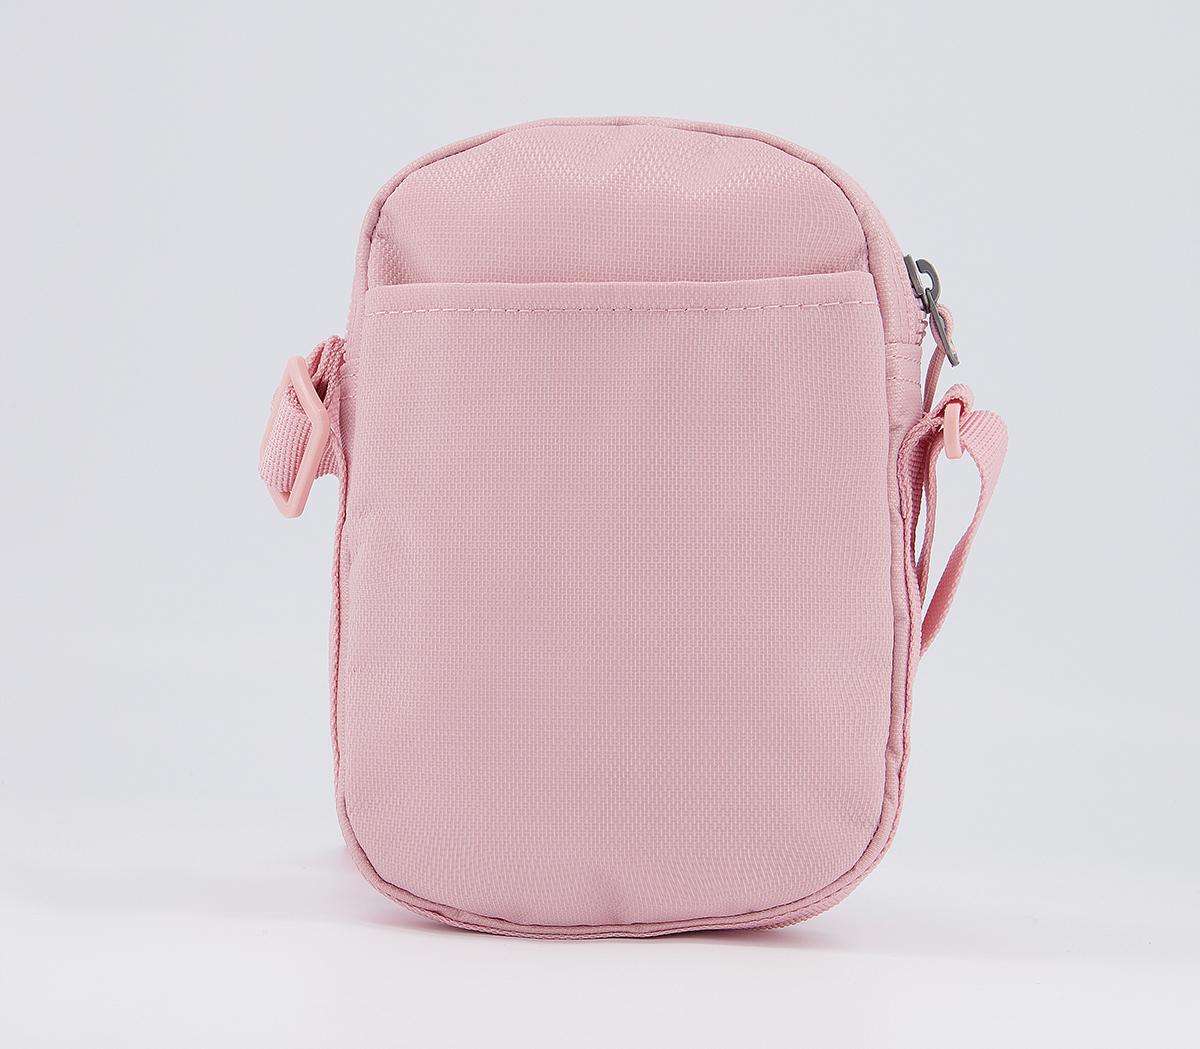 Nike Heritage Crossbody Bag Pink Glaze White - Accessories